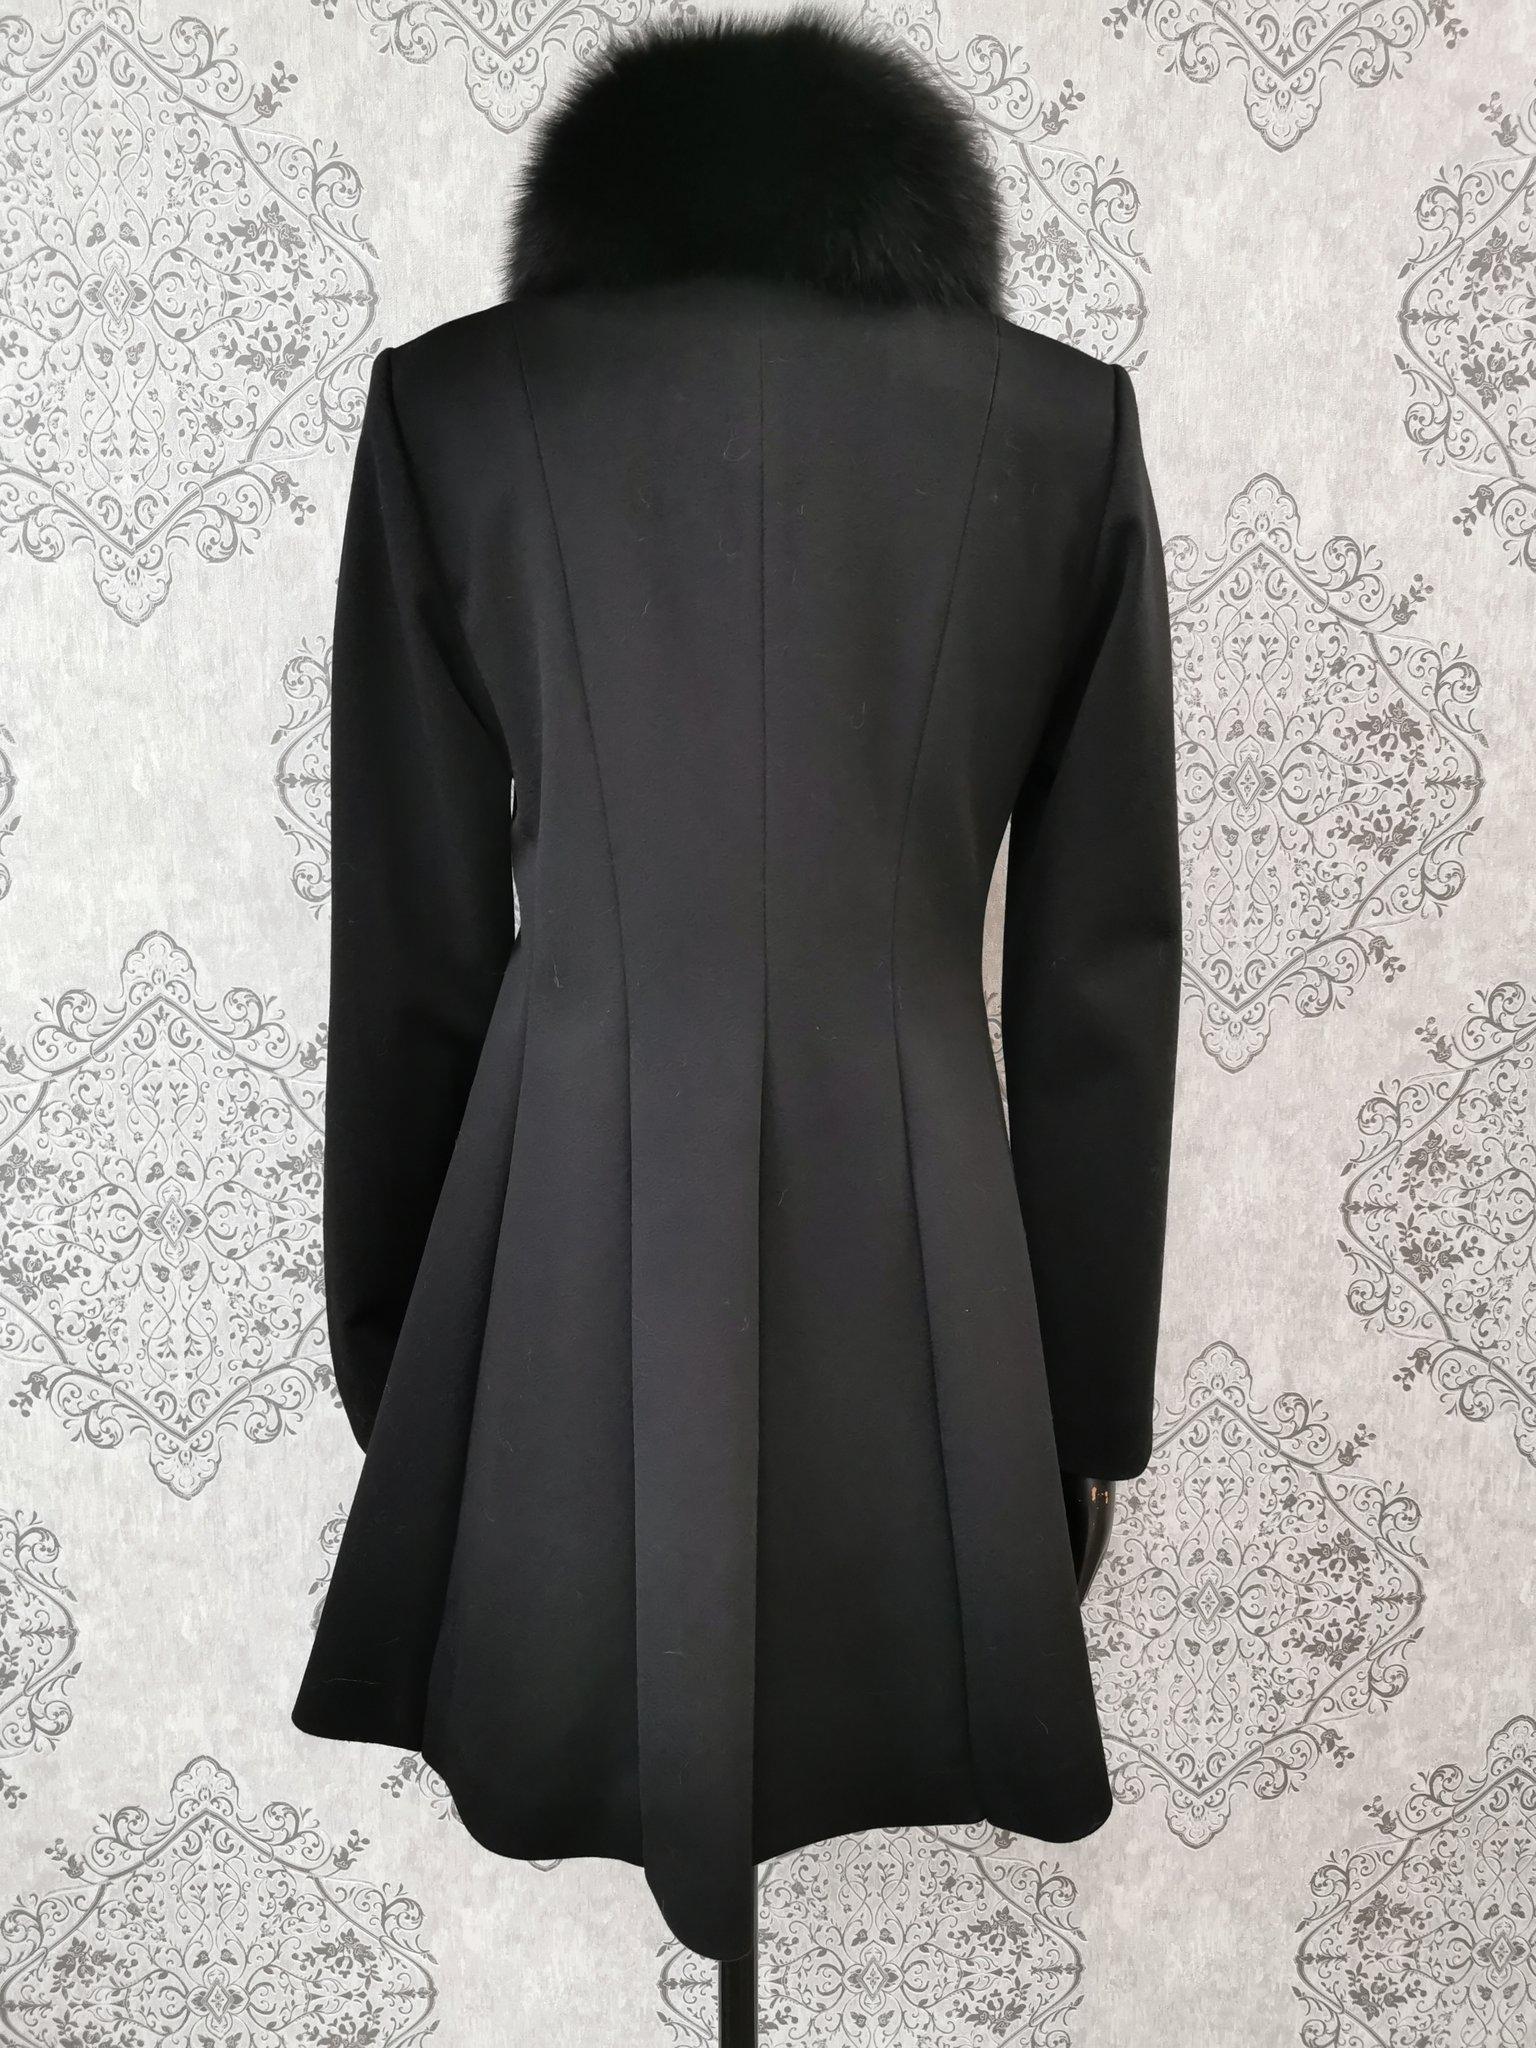 Black Brand new black Loro piana coat with fox fur trim size 4-6 For Sale